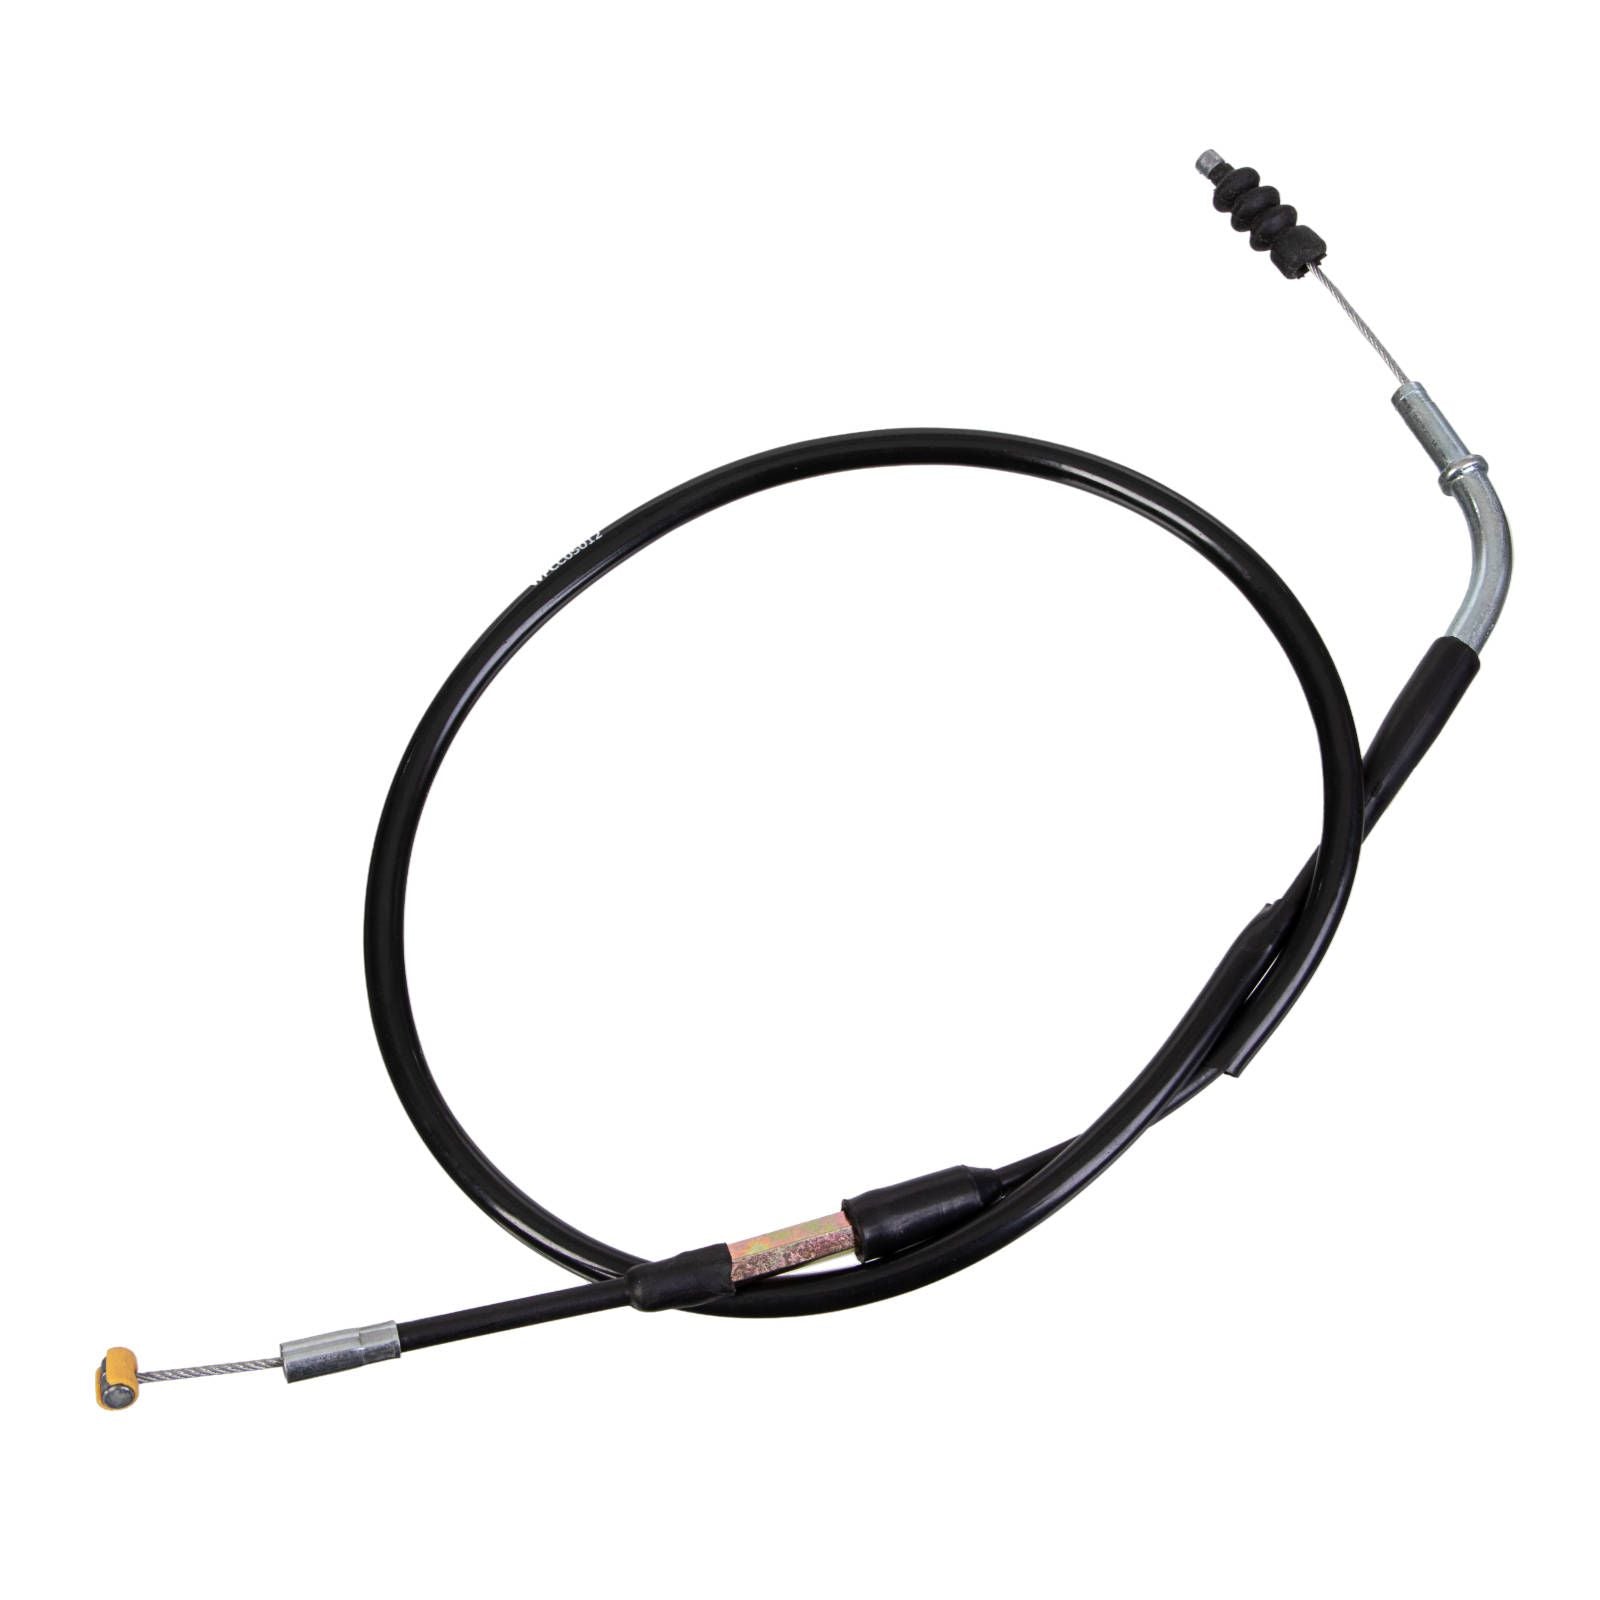 New WHITES Clutch Cable For Suzuki RMZ250 2010-2013 #WPCC05012